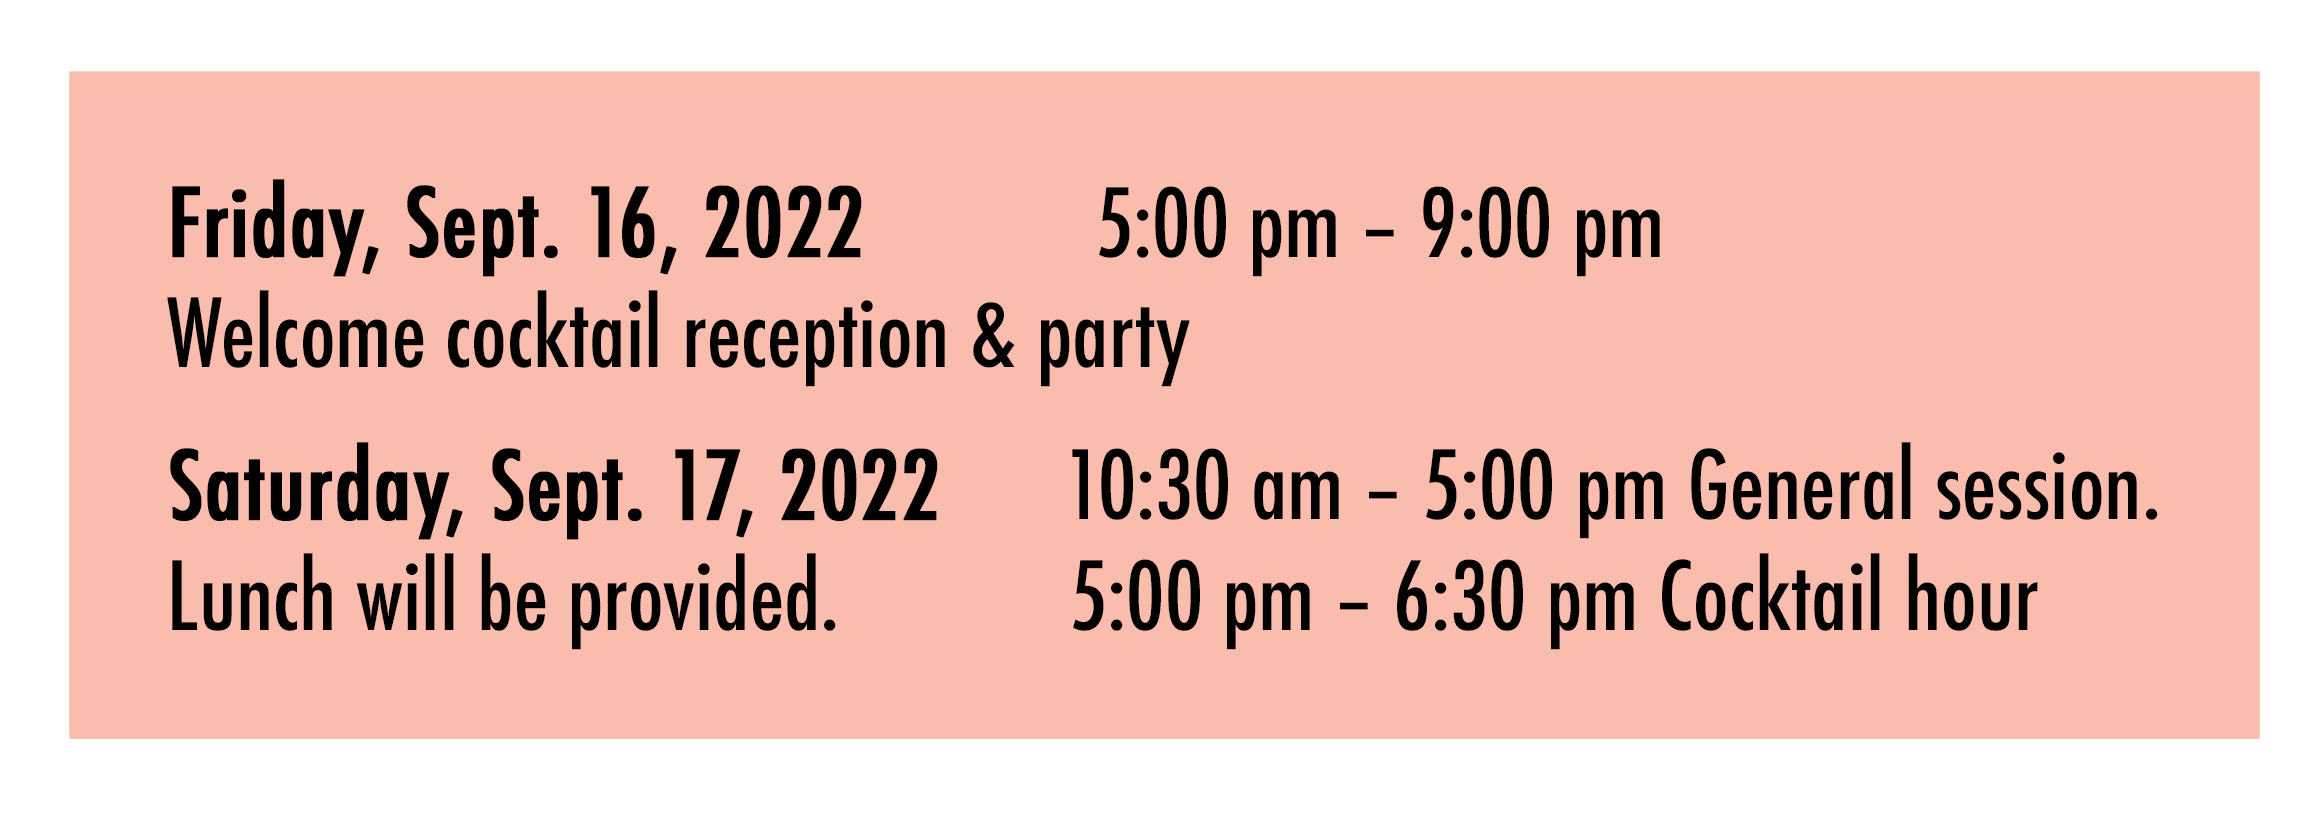 Denver-AOSInvite-Schedule